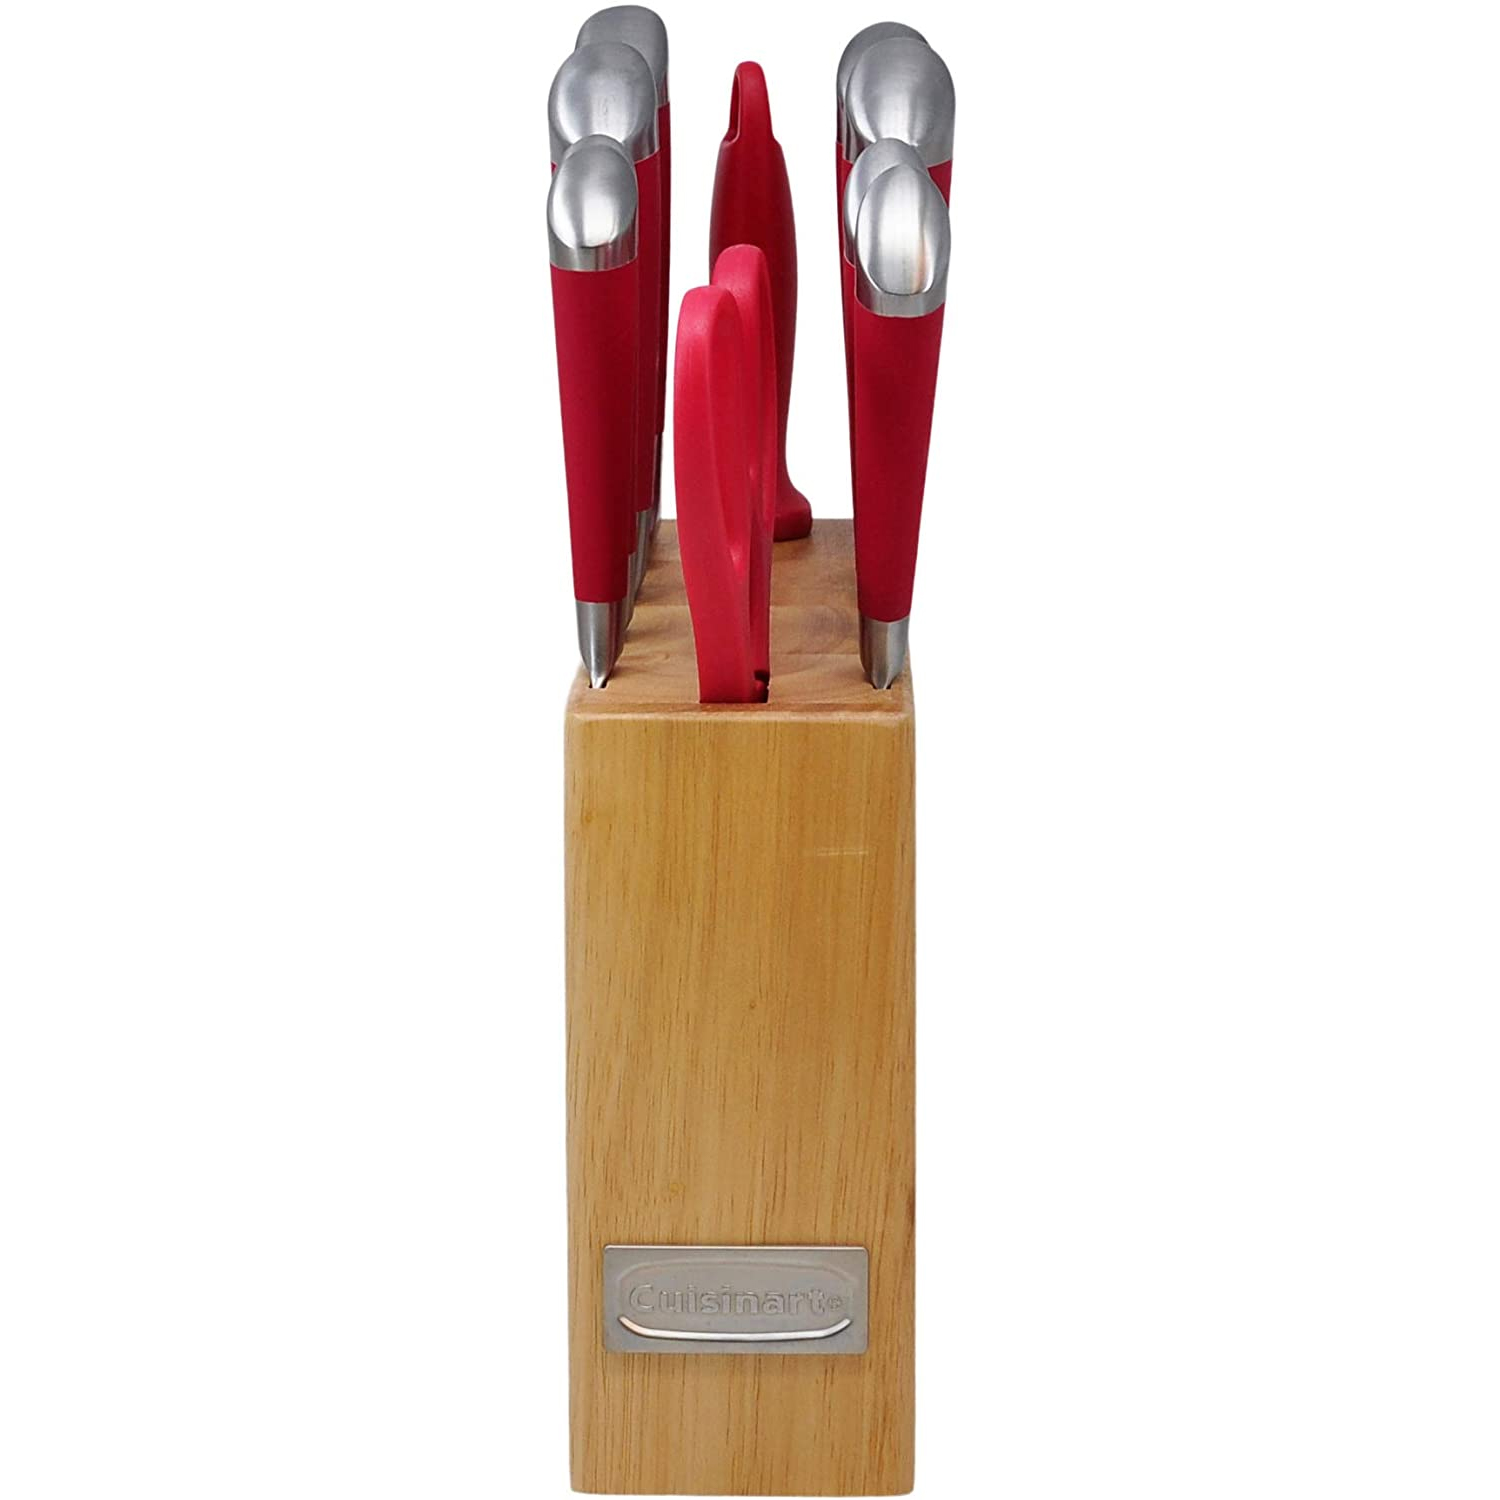 11 piece stainless steel kitchen knife set